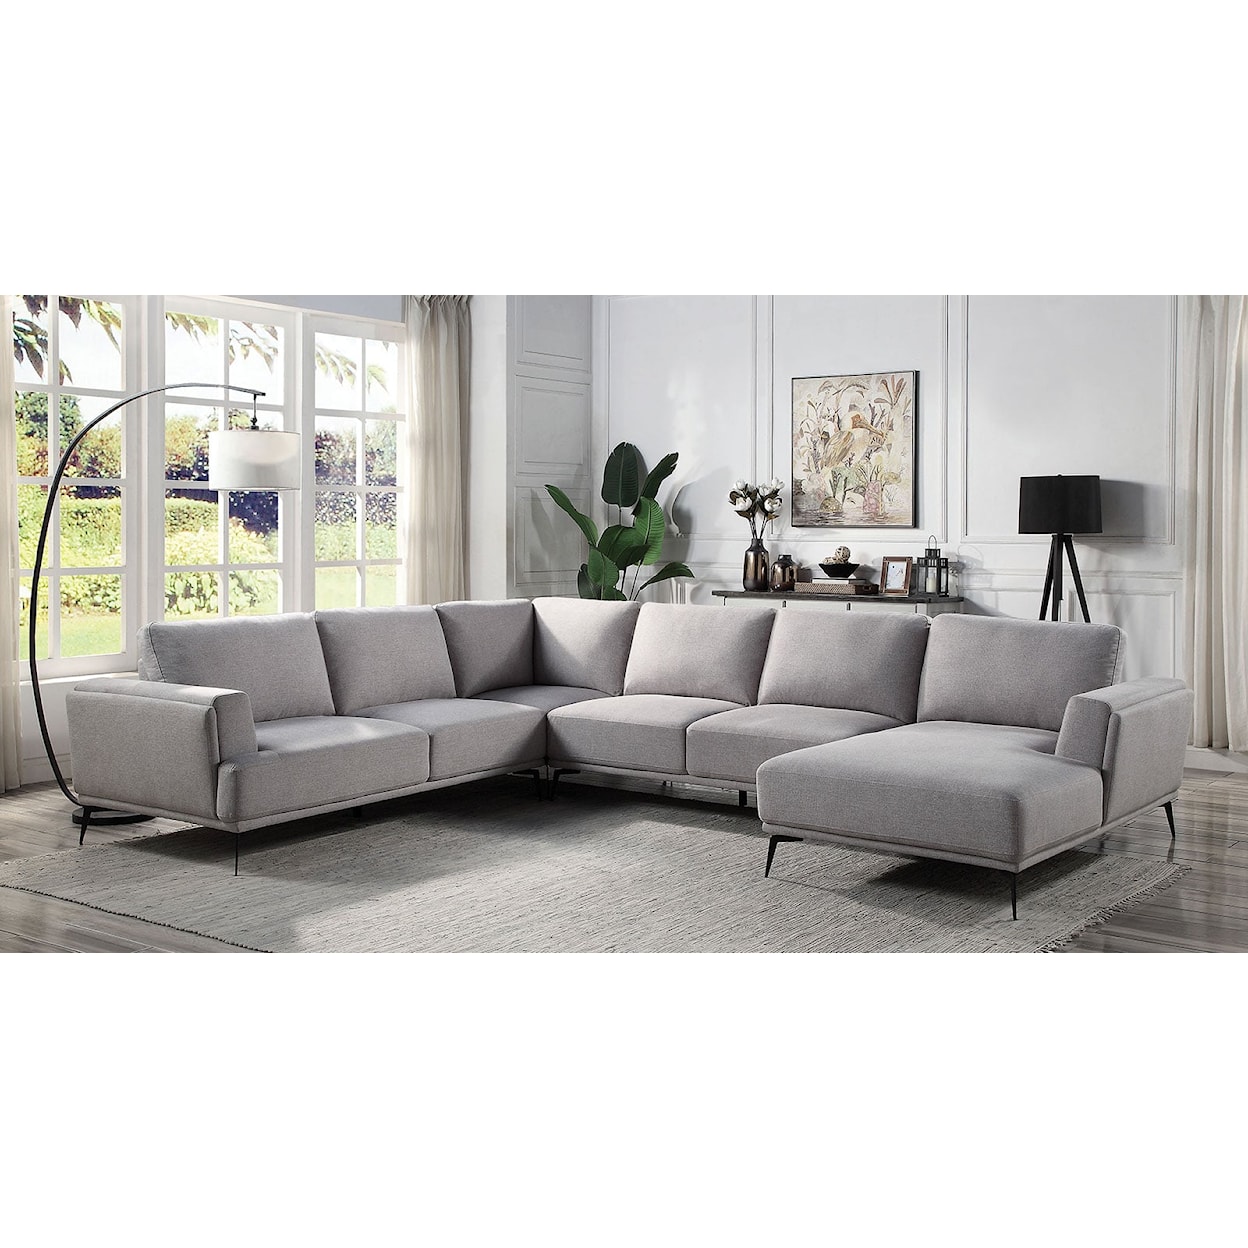 Furniture of America LAUFEN L Shaped Sectional Sofa